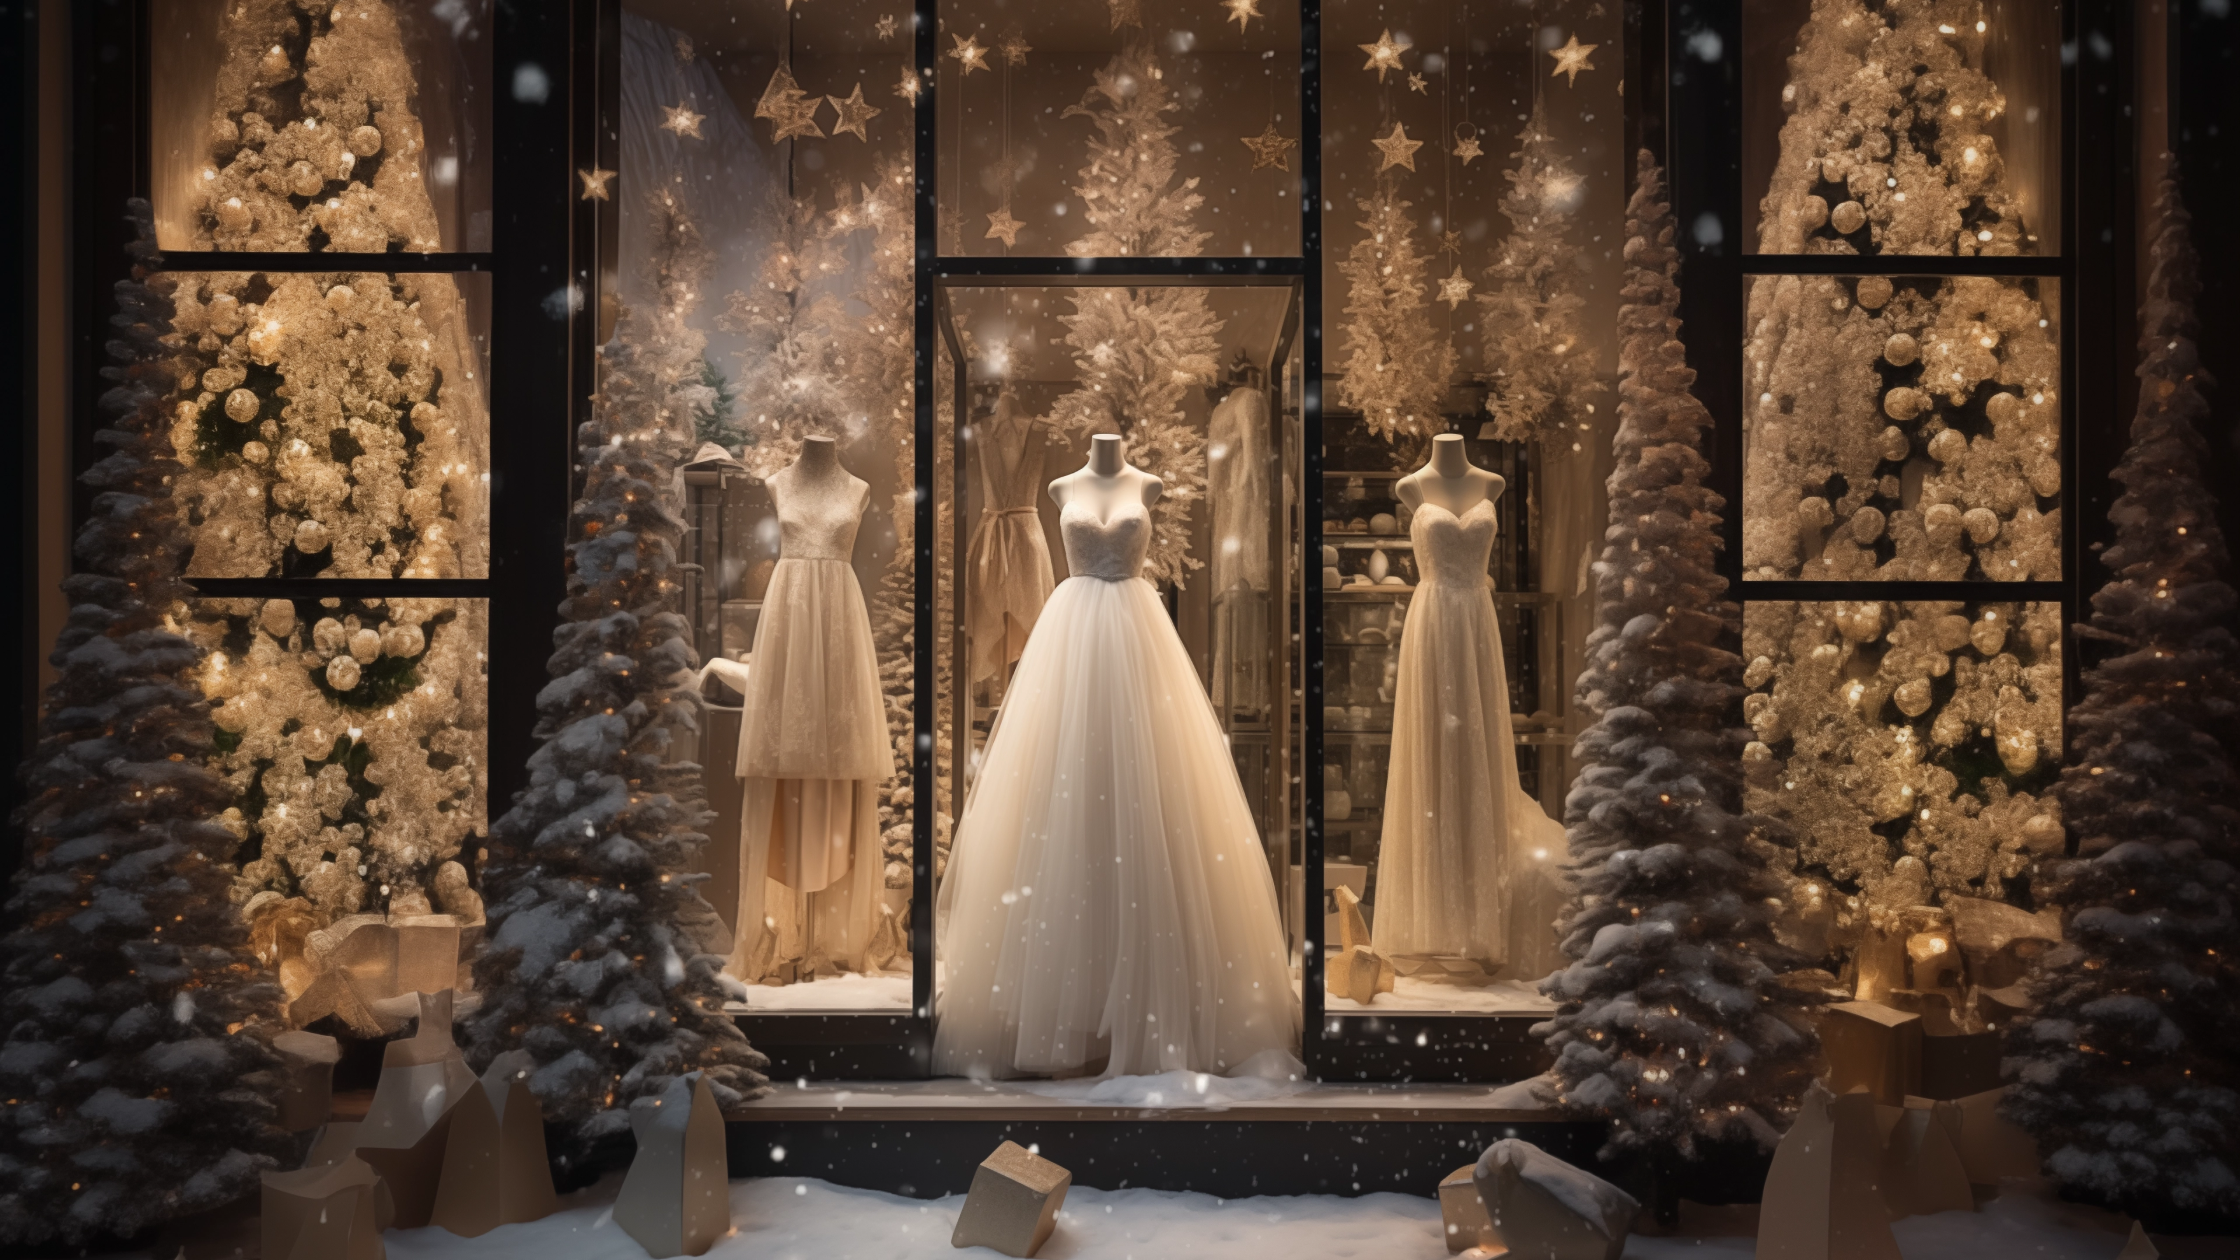 Dovita's Sparkling Partner Showcase: A Bridal Wonderland for the New Year